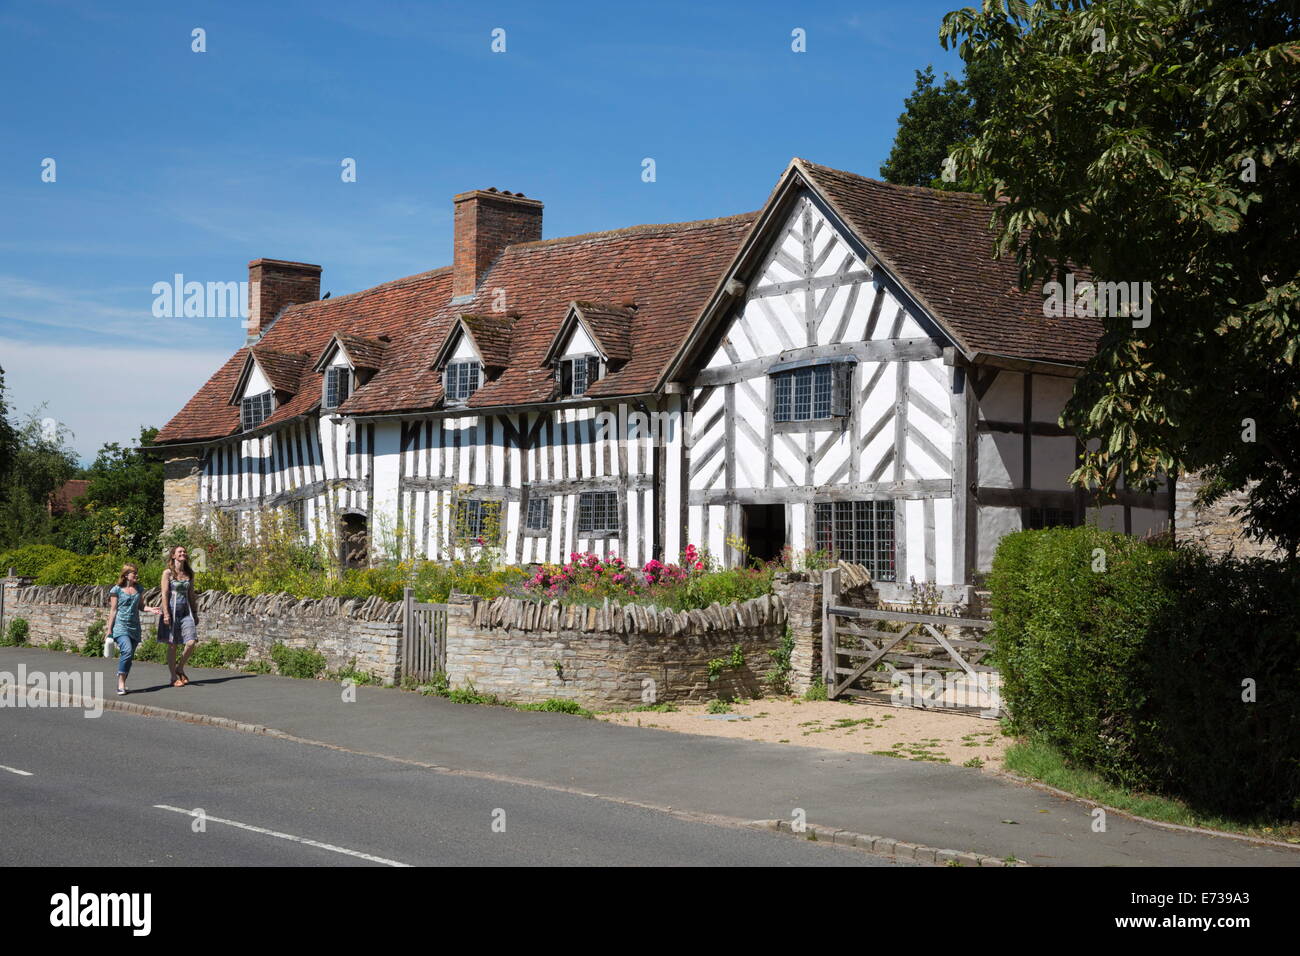 Palmer's farmhouse, Mary Arden's Farm, Stratford-upon-Avon, Warwickshire, England, United Kingdom, Europe Stock Photo